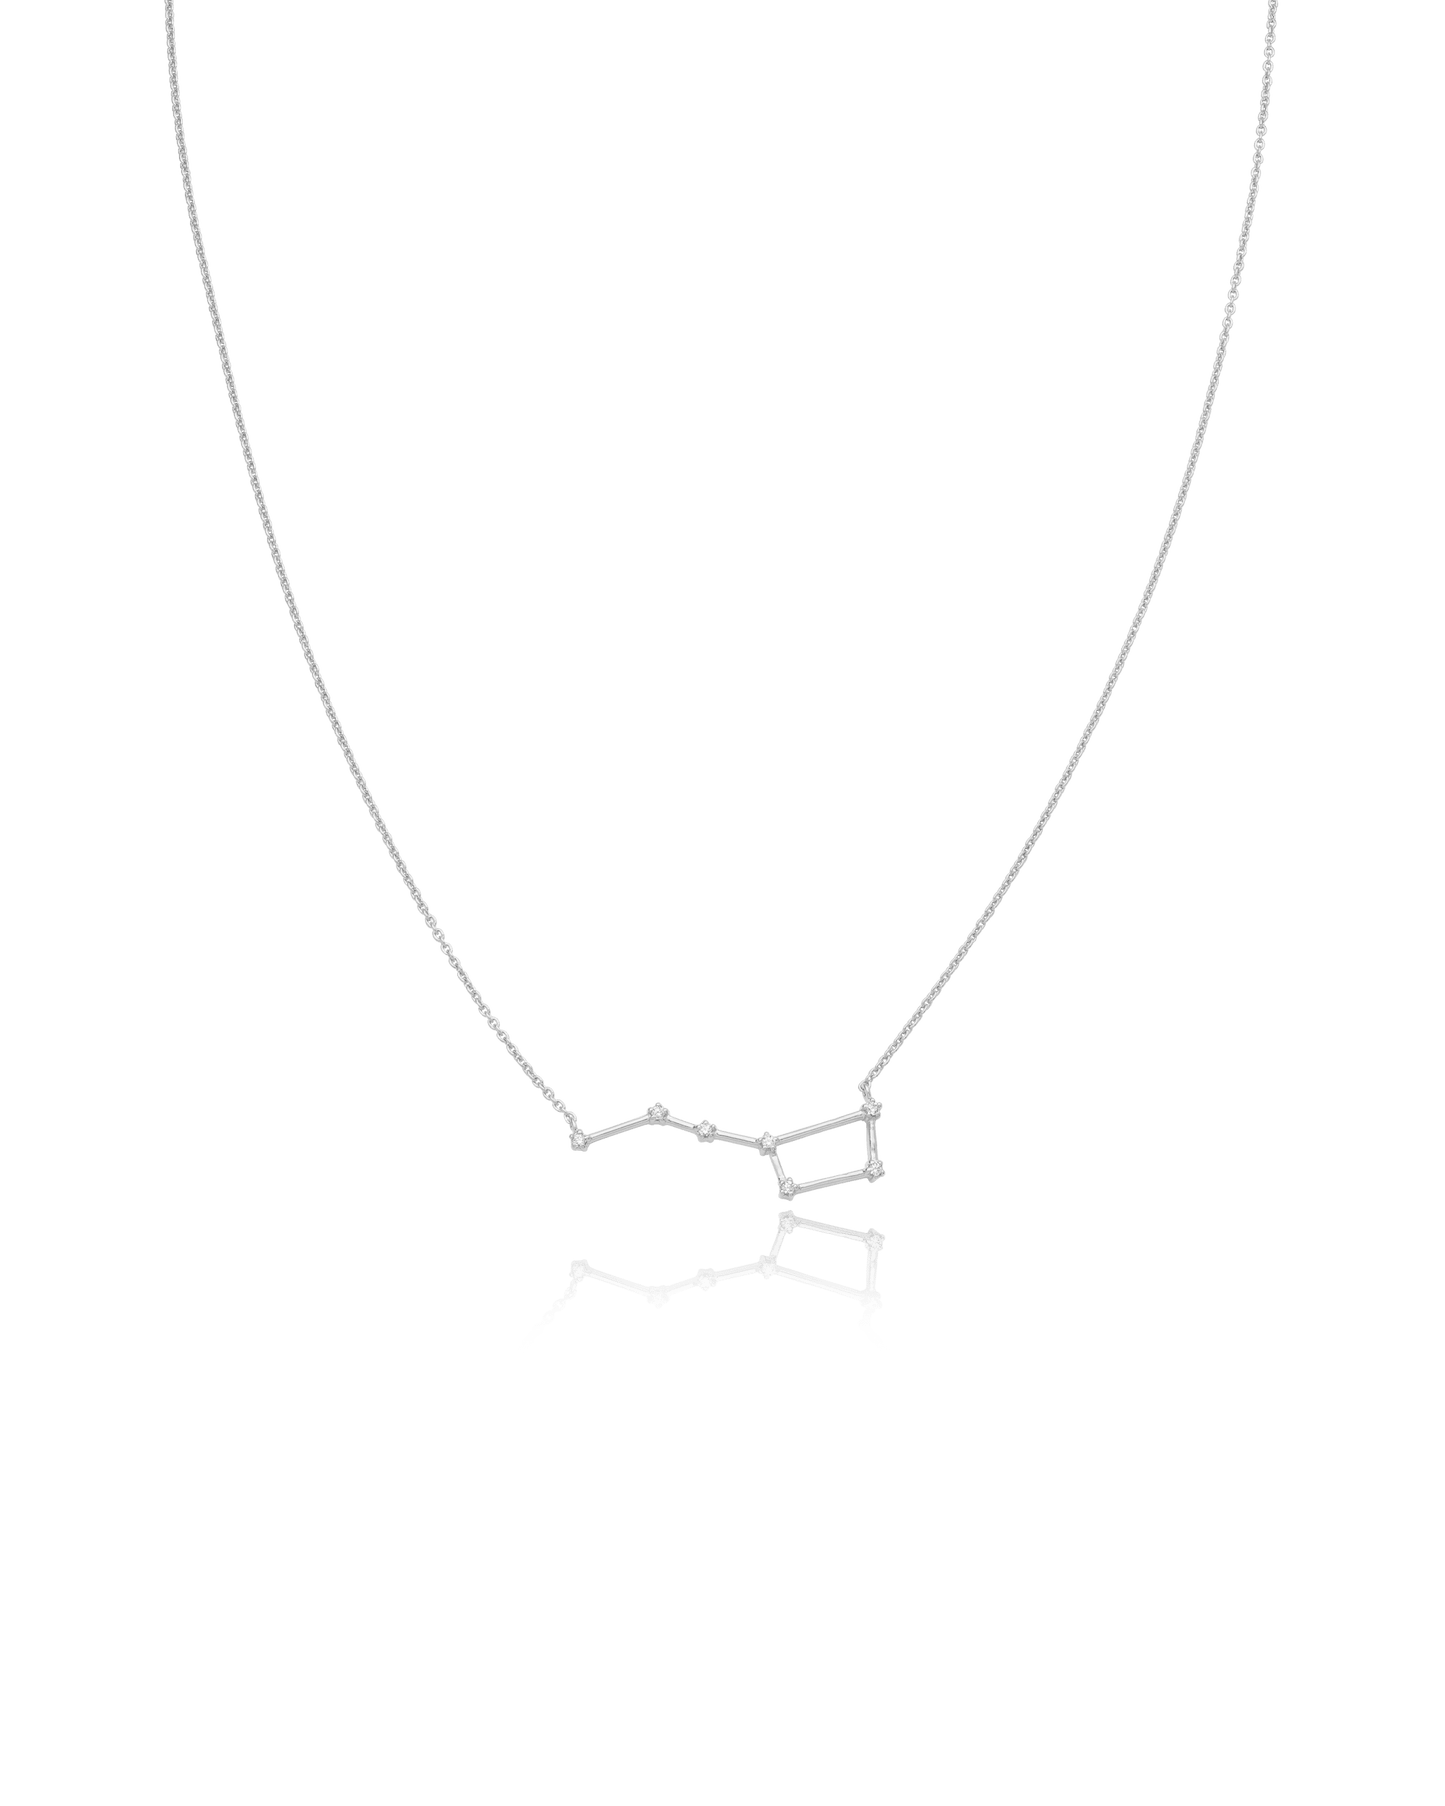 Ursa Major Constellation Necklace - 925 Sterling Silver Necklaces magal-dev Big Dipper 16" 